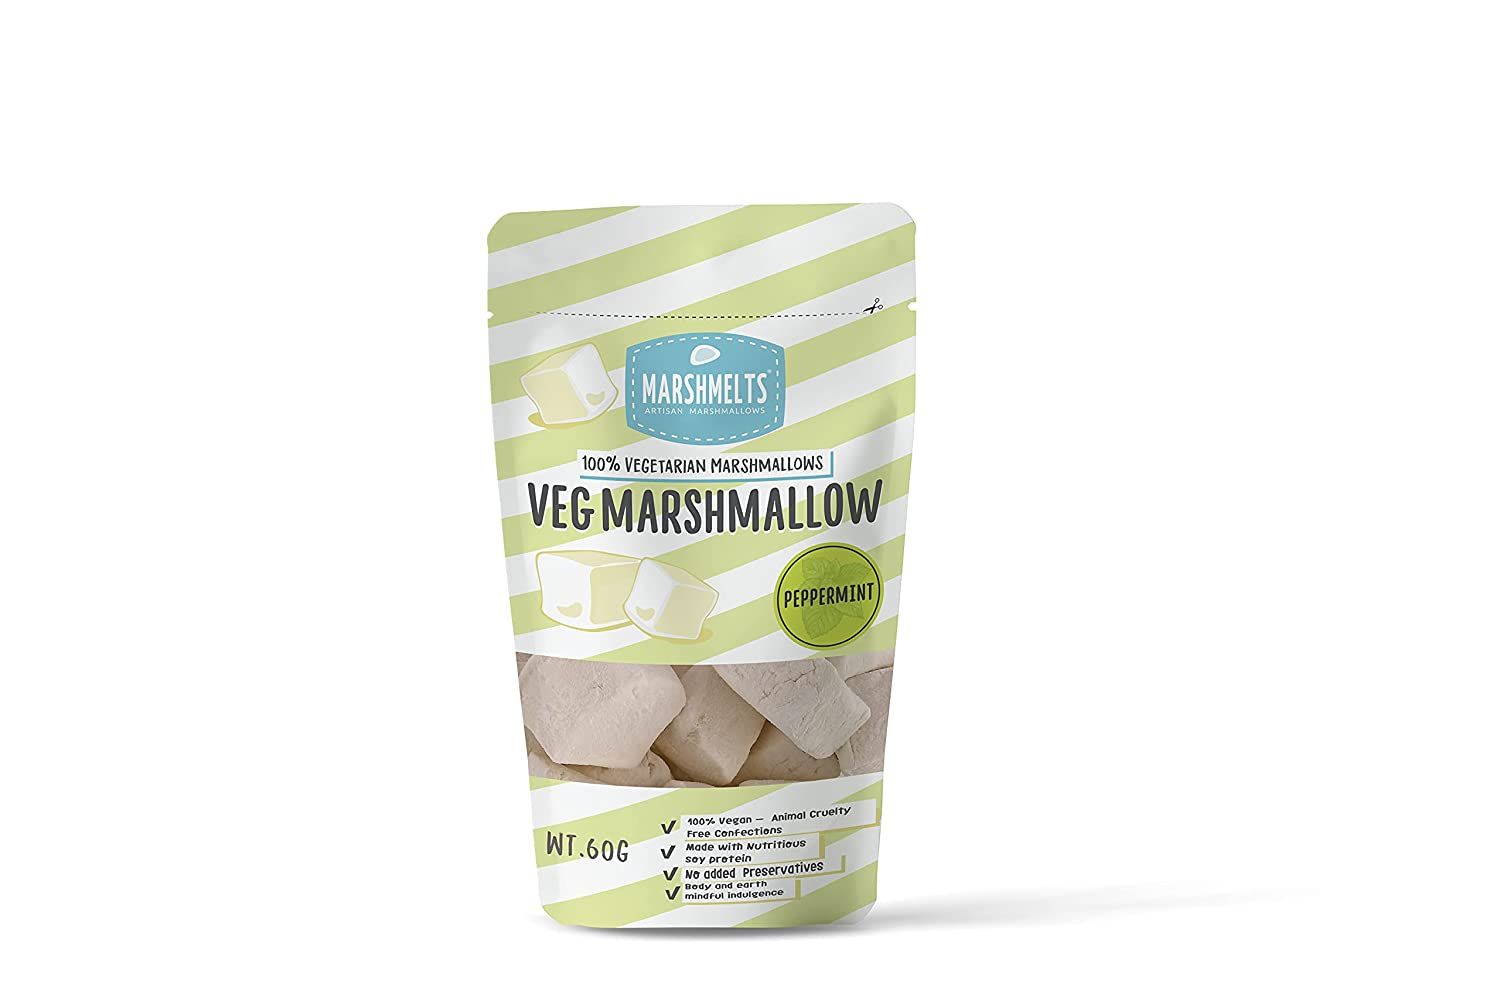 Marshmelts Veg Marshmallow Peppermint Flavour Image